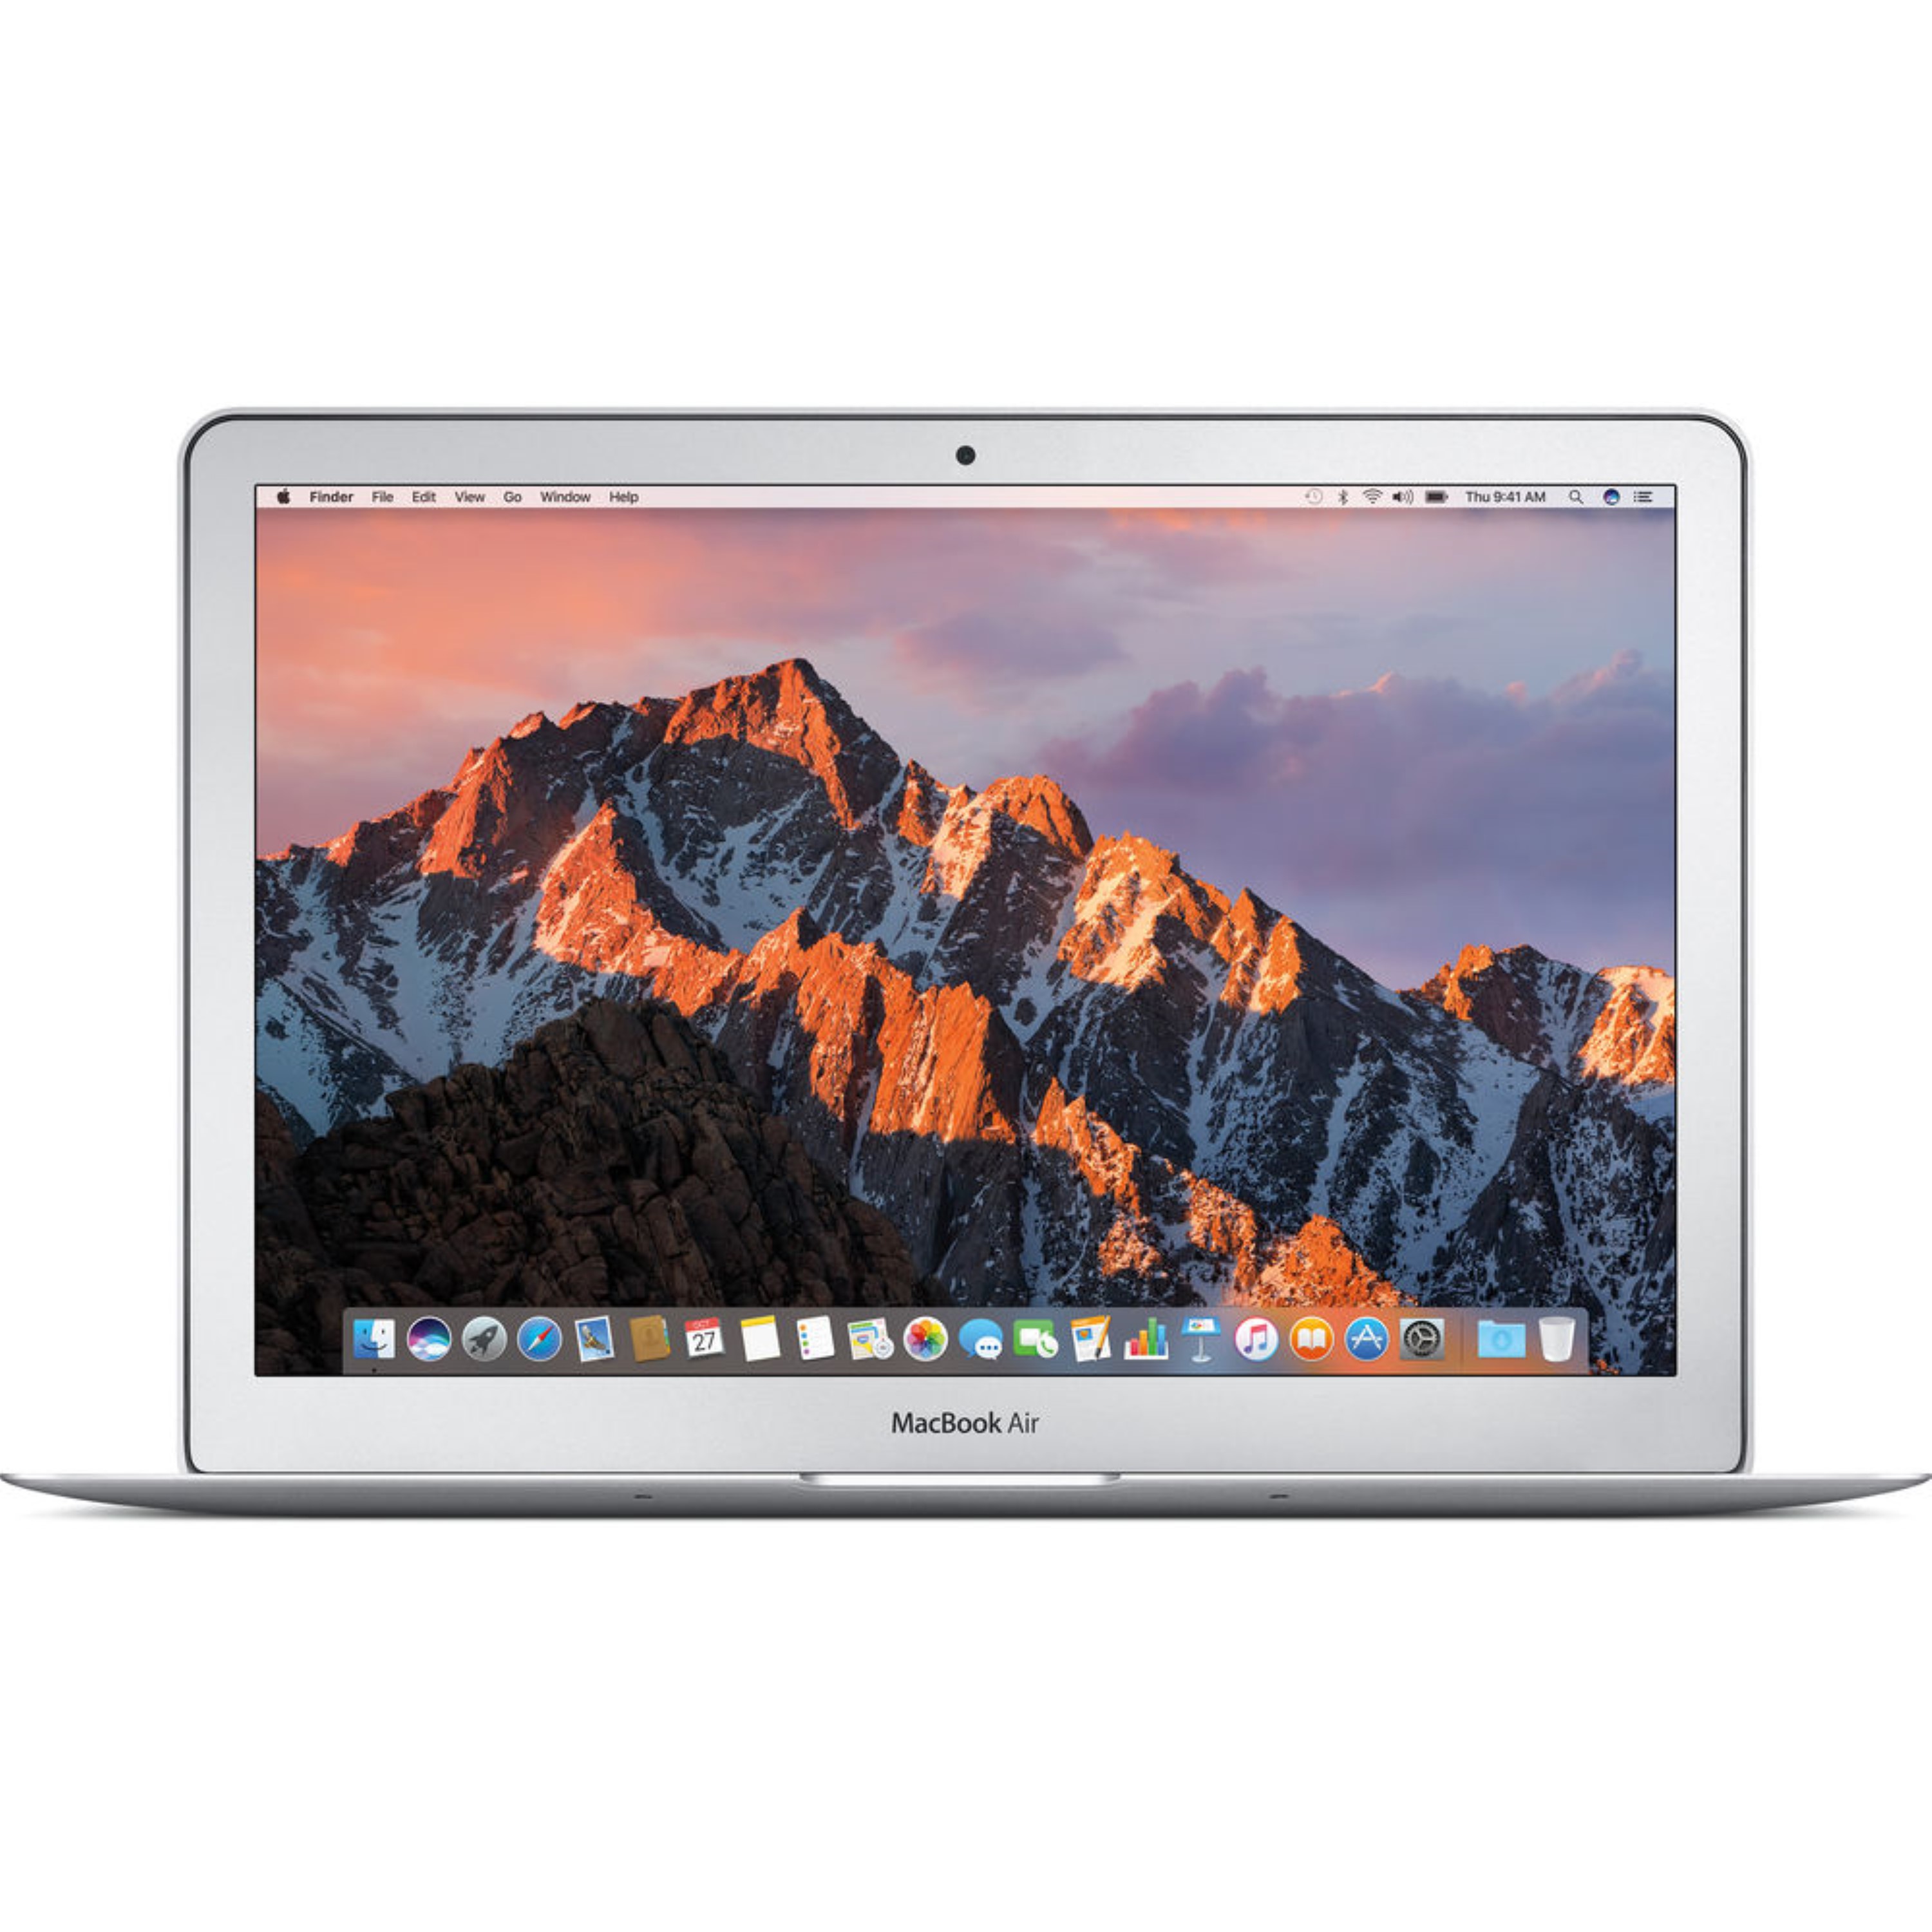 Apple MacBook Air 13-inch Mid 2013 Intel Core i5, 4GB RAM, 128GB ...